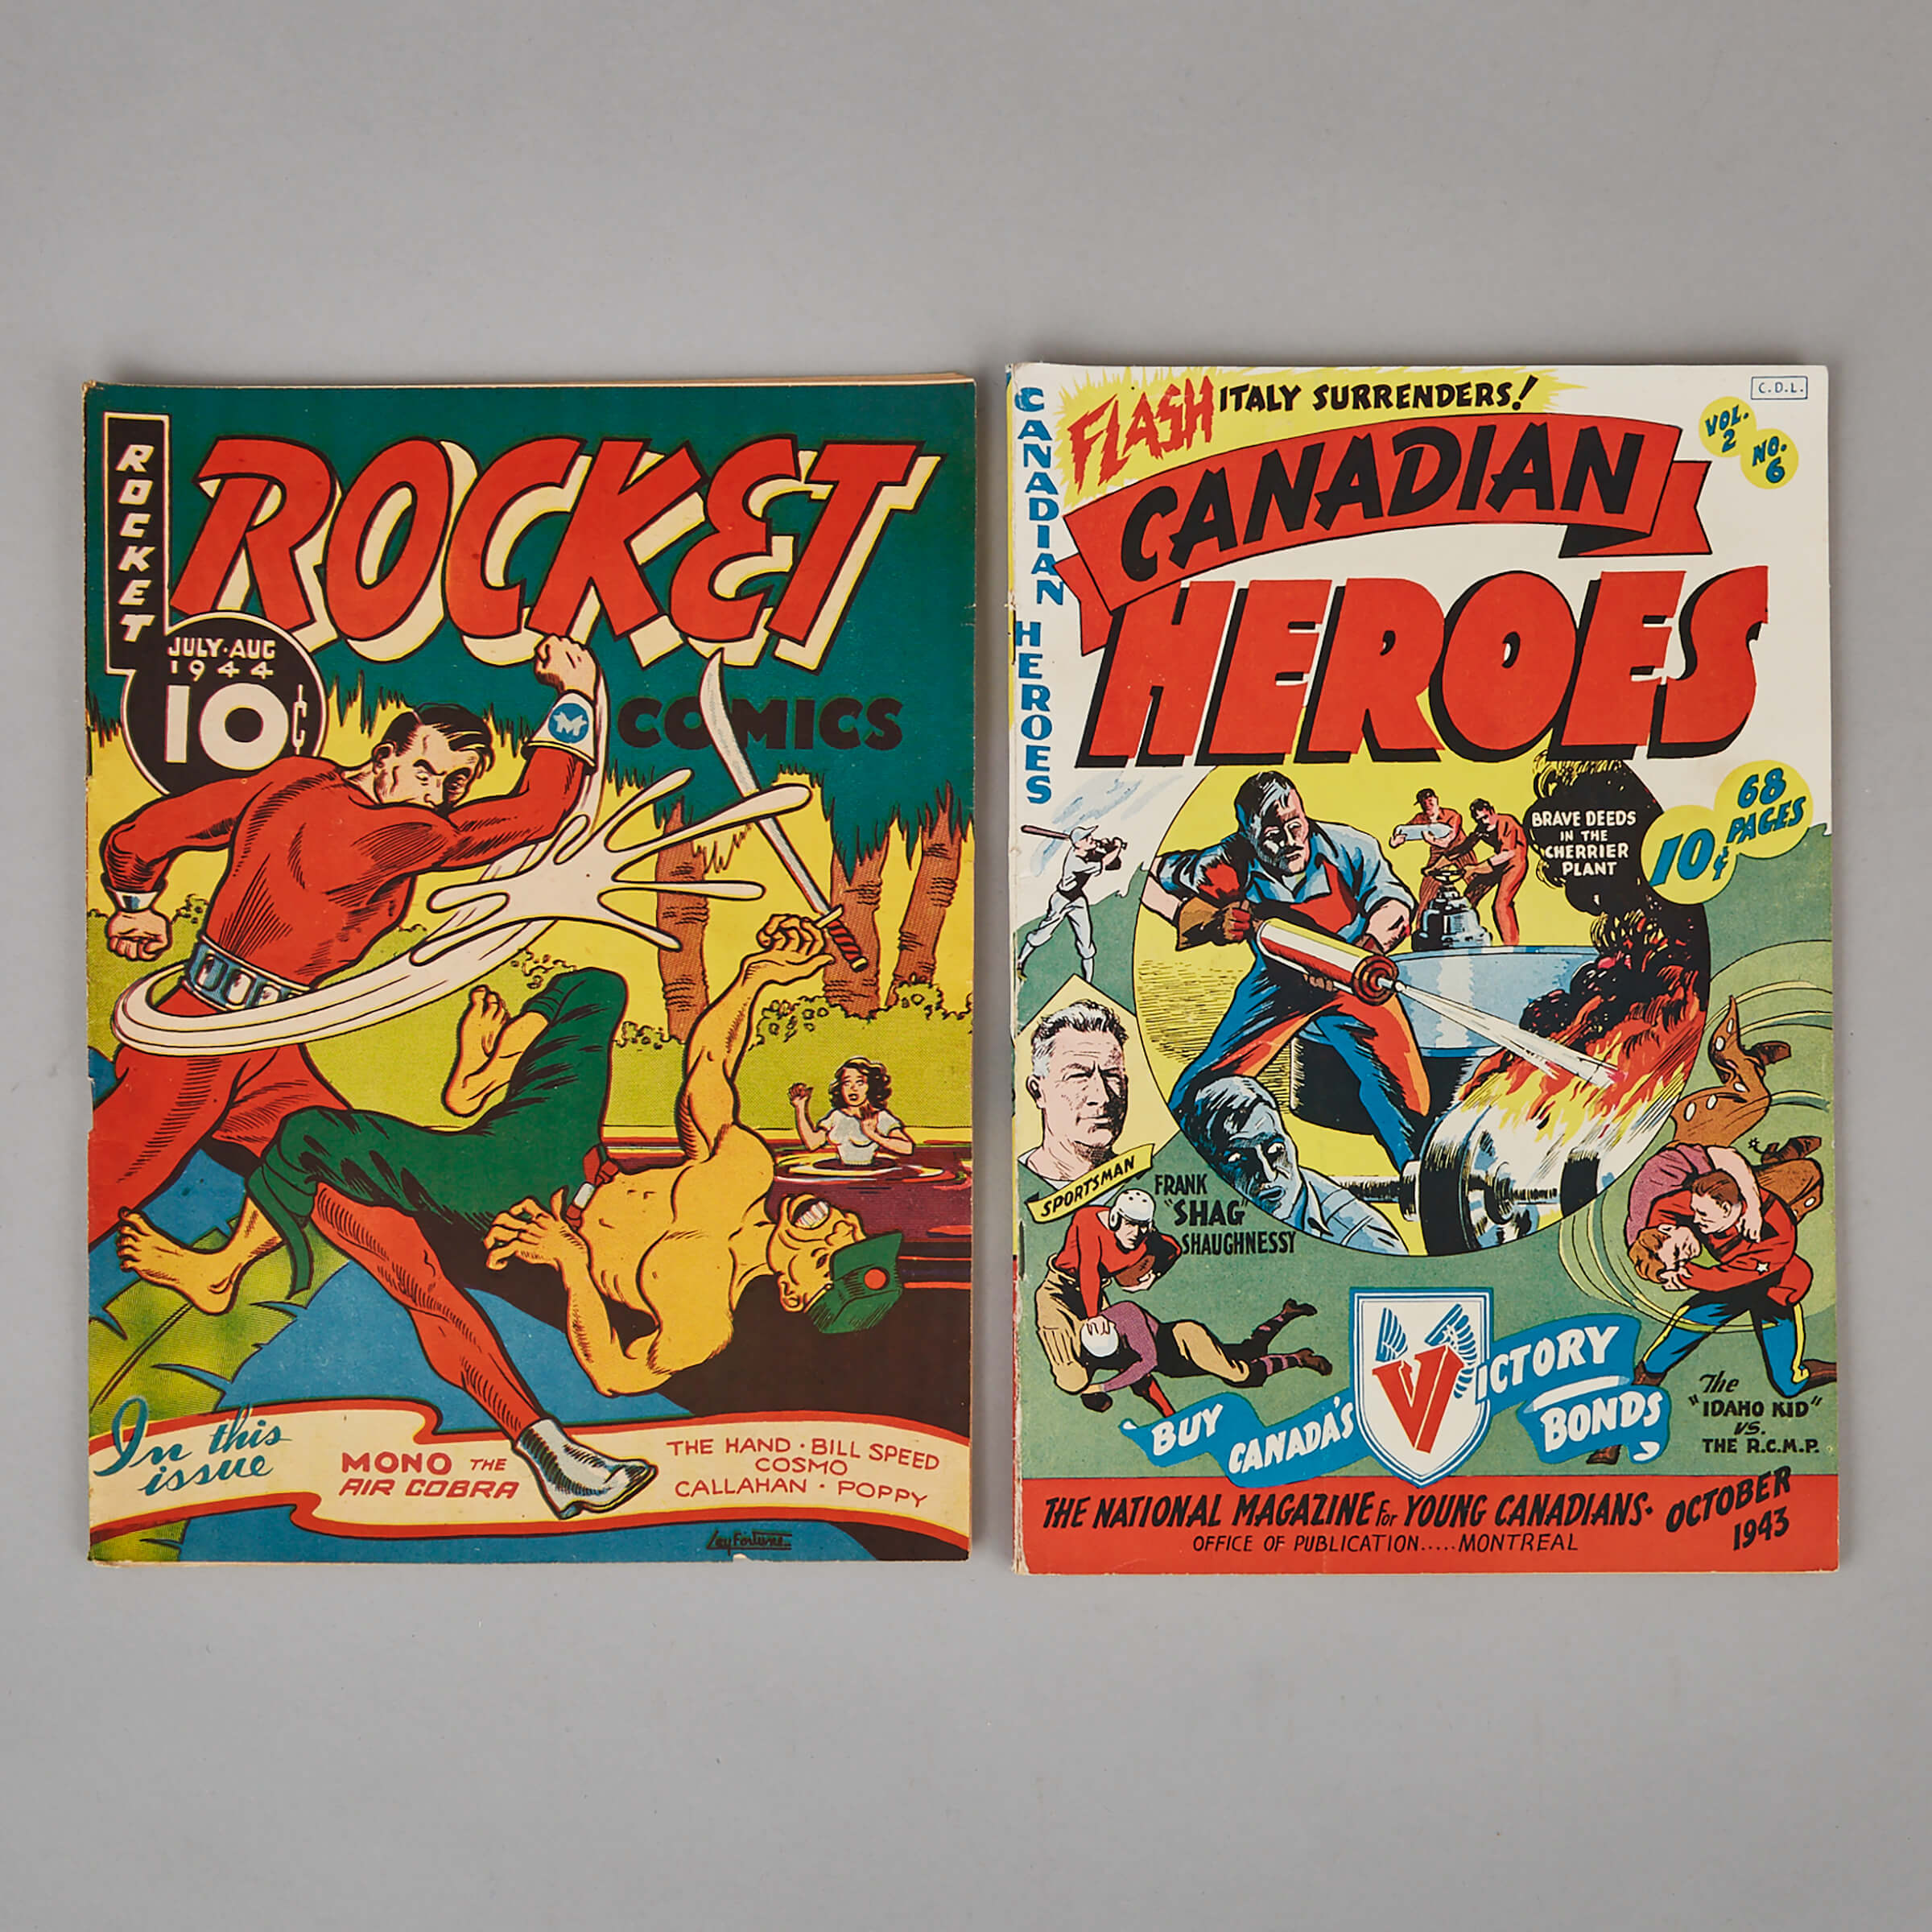 Two World War II Era Canadian Comic Books, 1943-1944